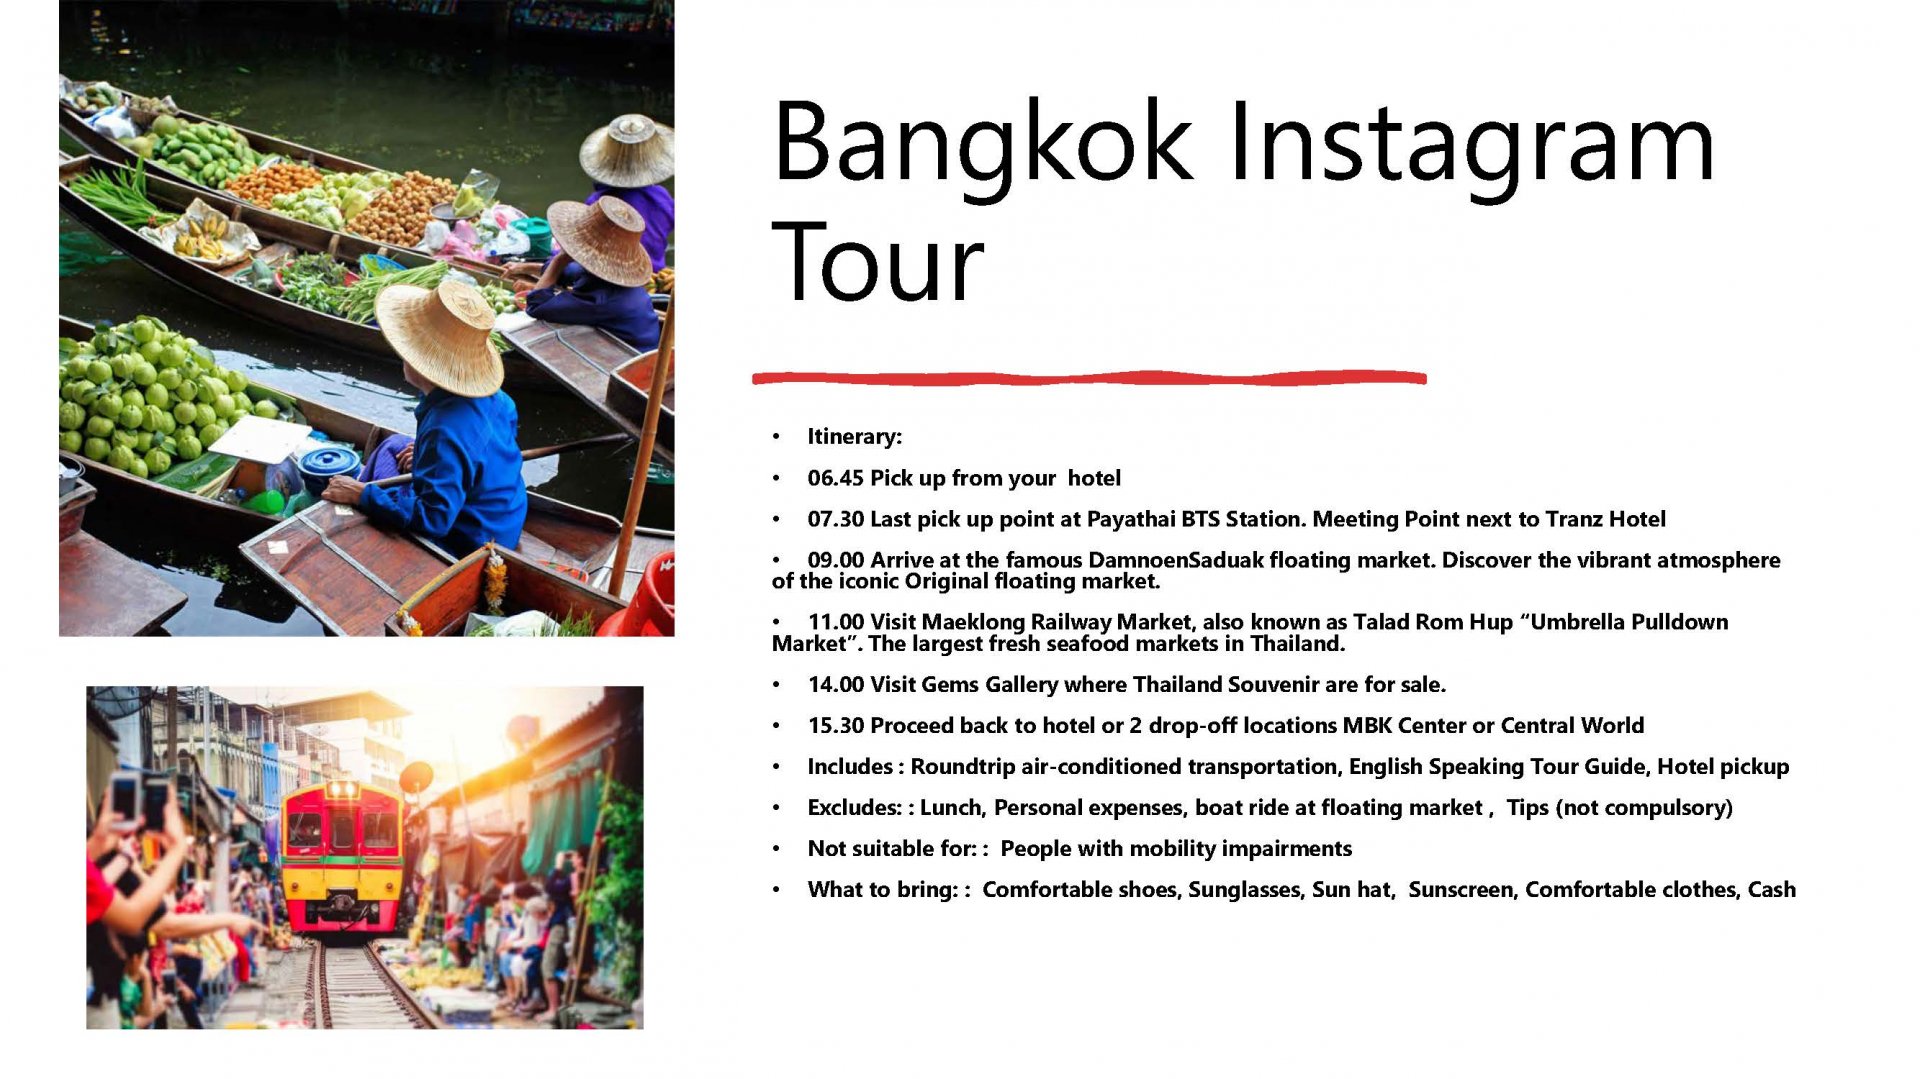 Bangkok City Tour CHANGED to Bangkok Instagram Tour 